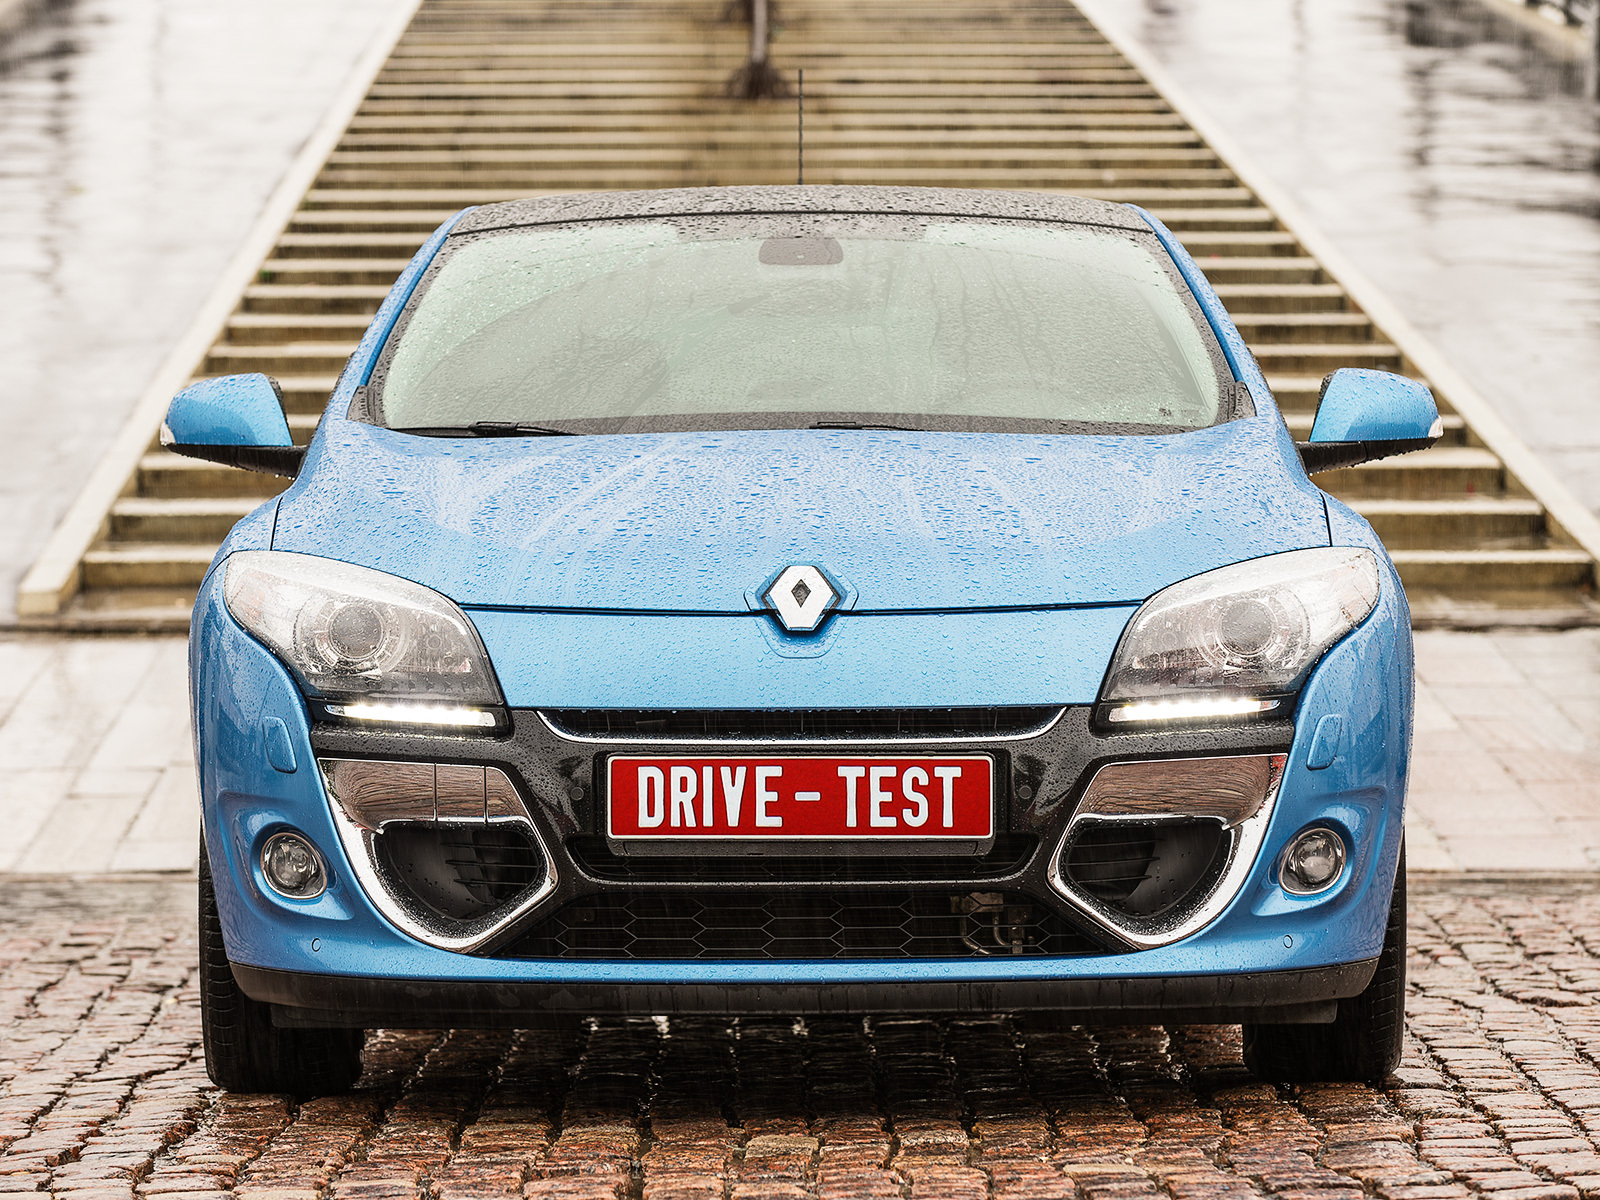   Kia pro_ceed  Renault Megane Coupe   3D